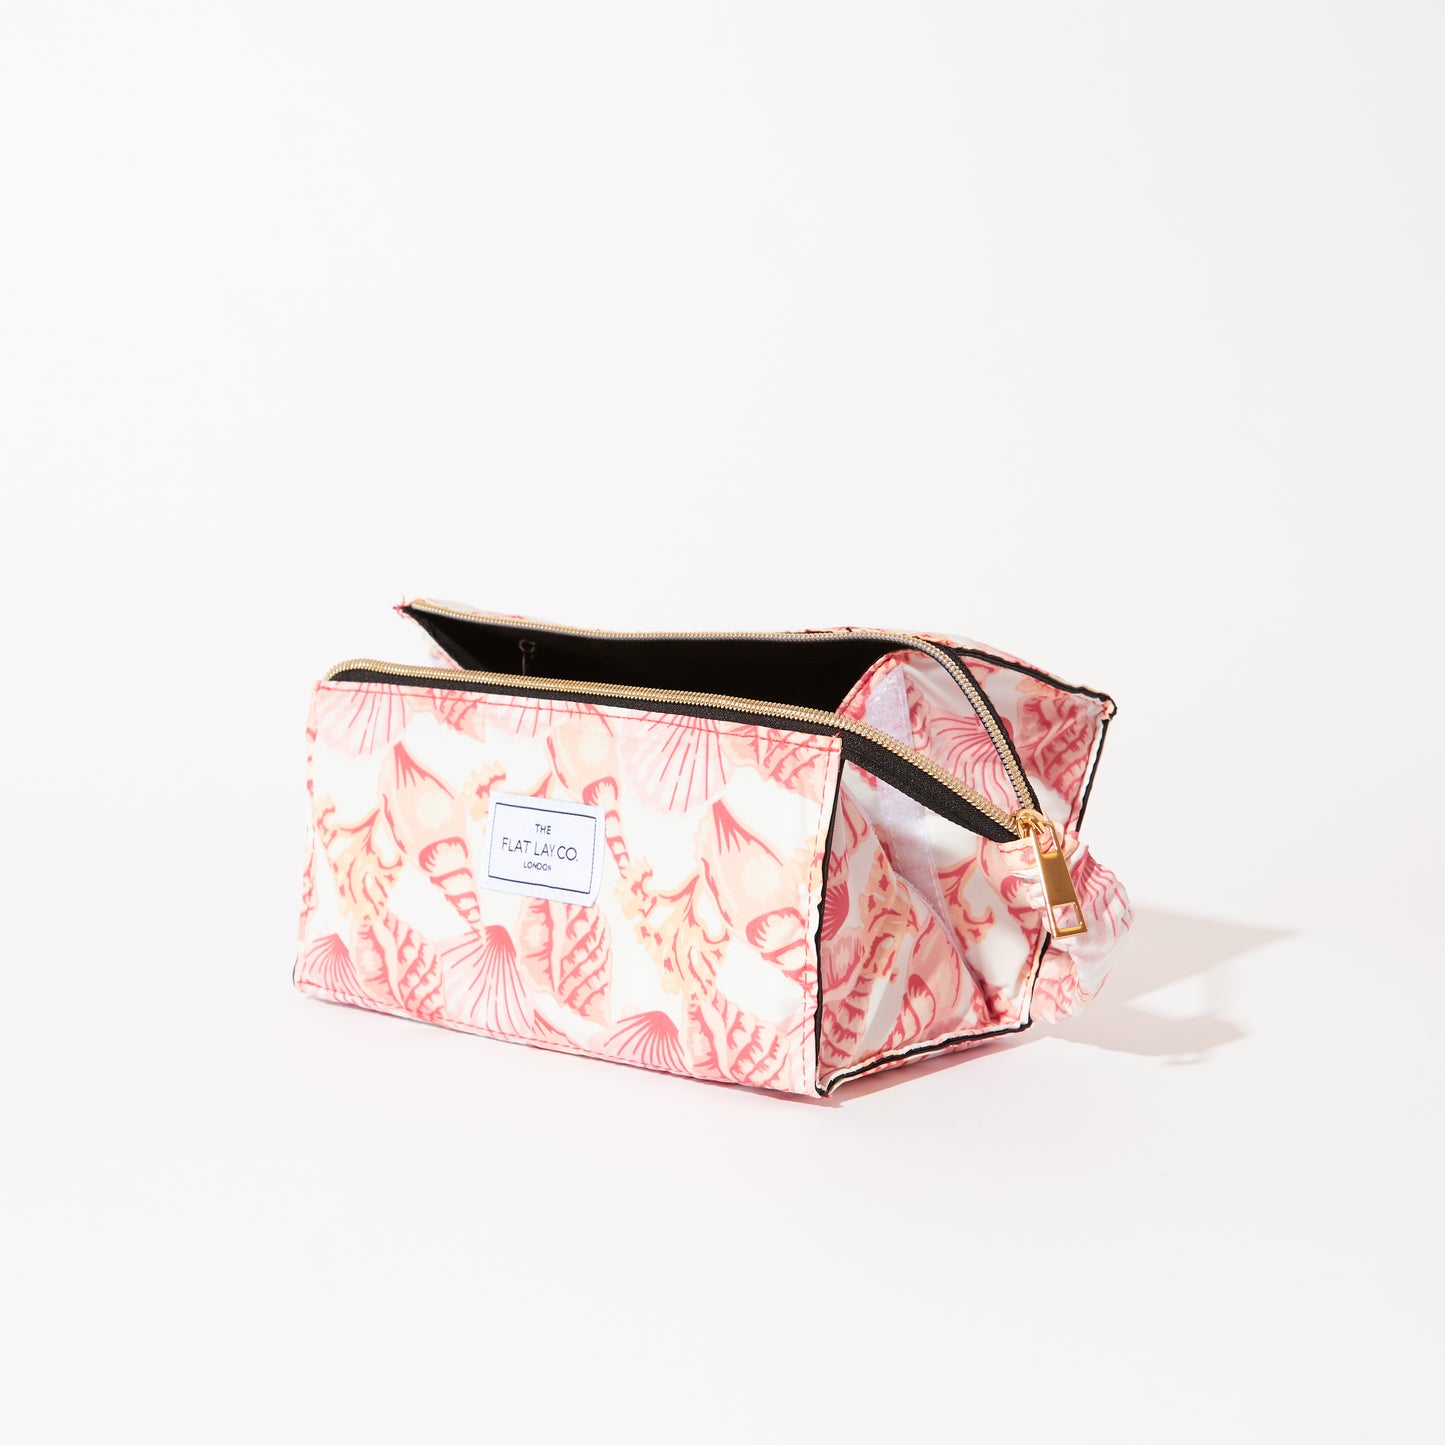 Pink Shells Open Flat Makeup Box Bag and Tray